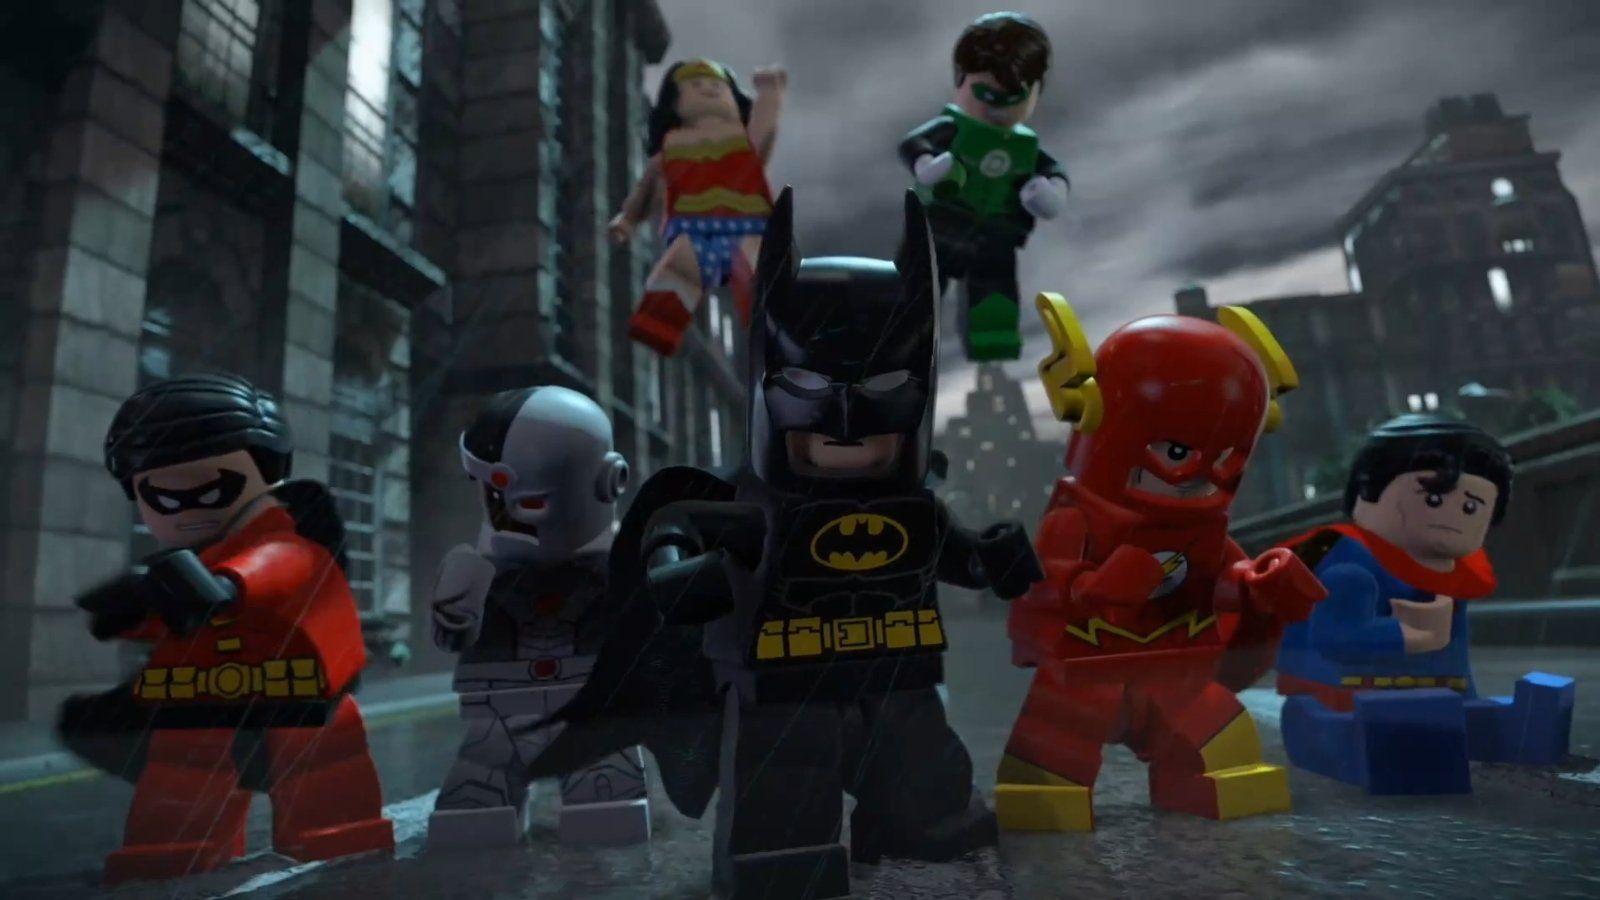 LEGO Batman 2: DC Super Heroes Wallpaper and Background Imagex900